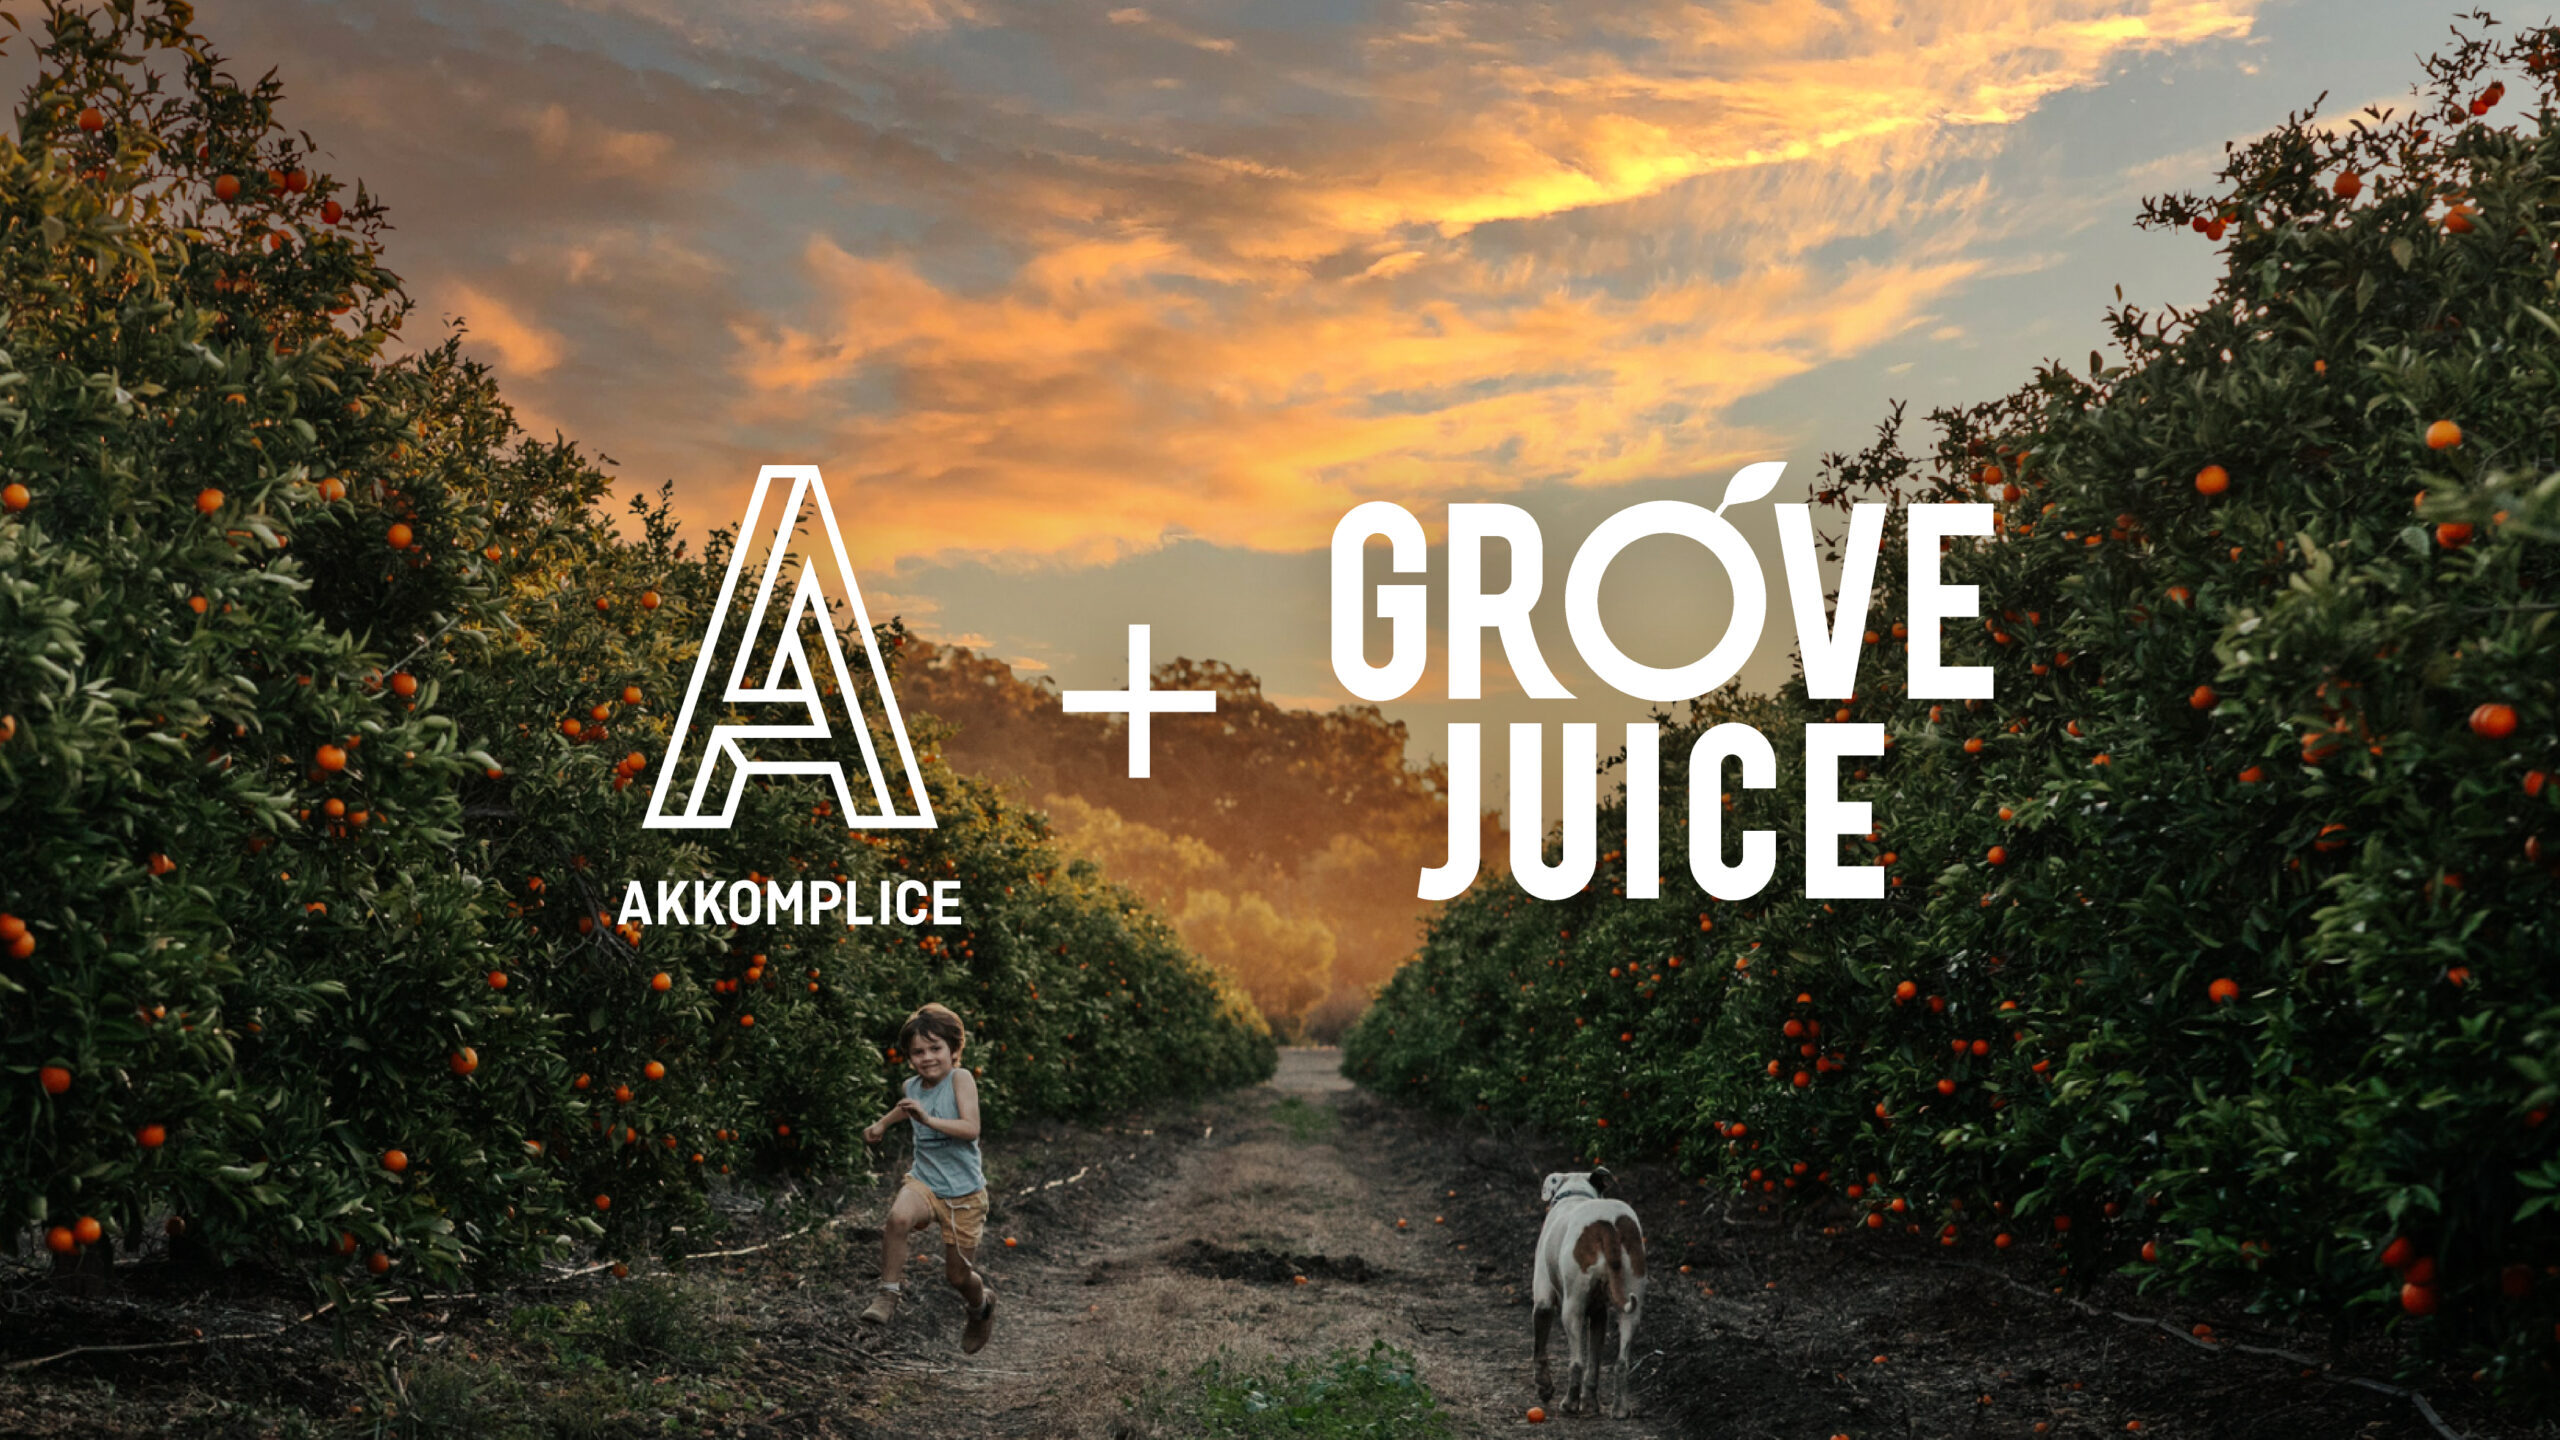 Grove Juice appoints Akkomplice as lead creative agency